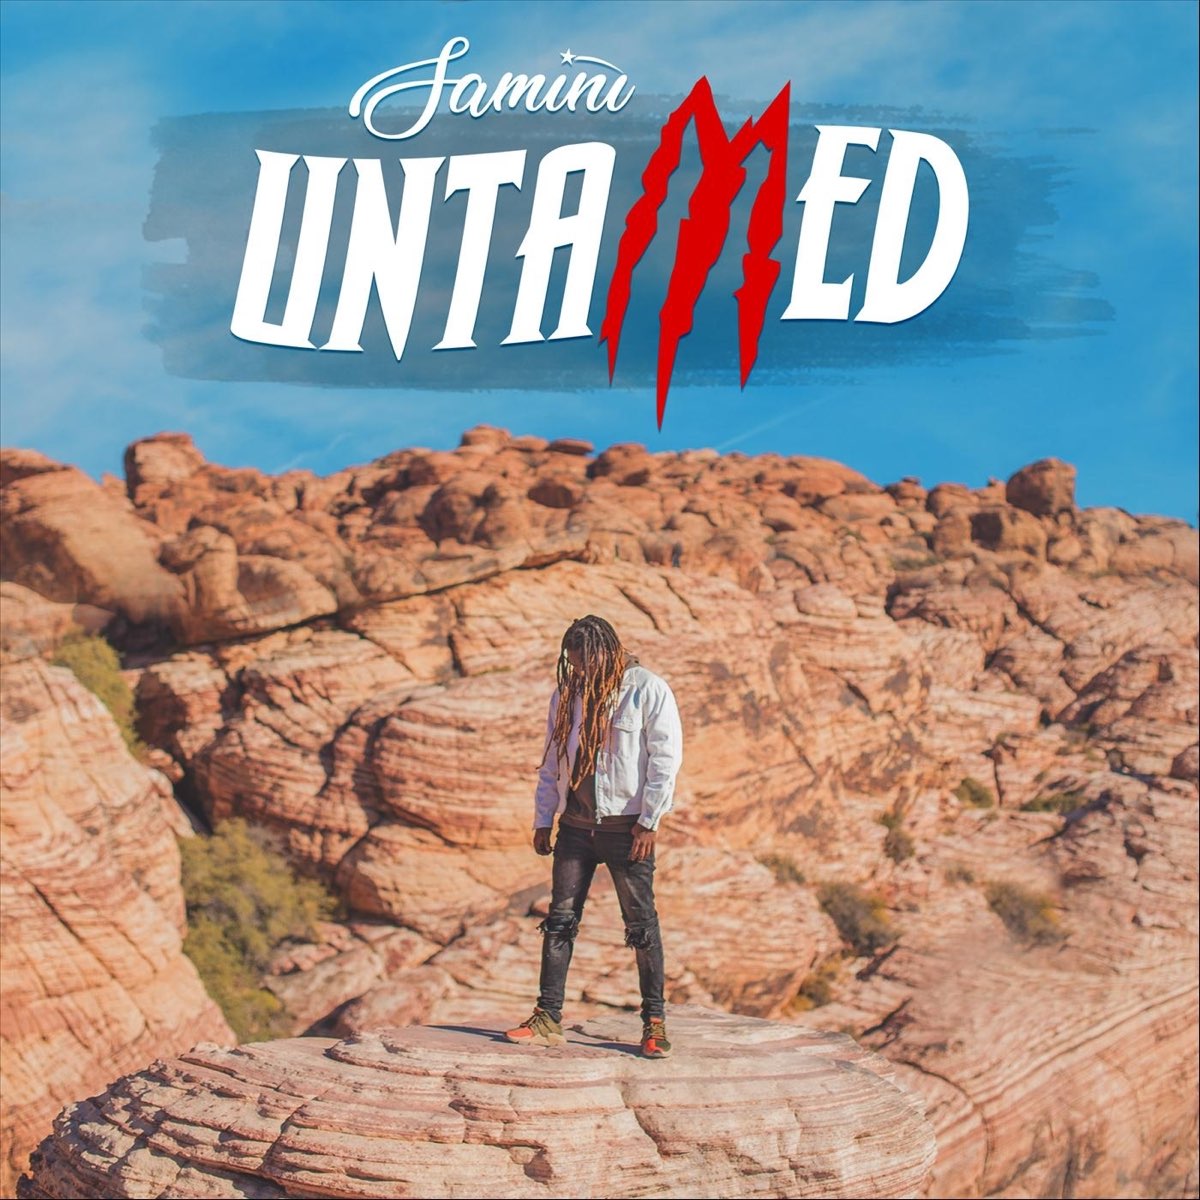 Untamed by Samini | Album